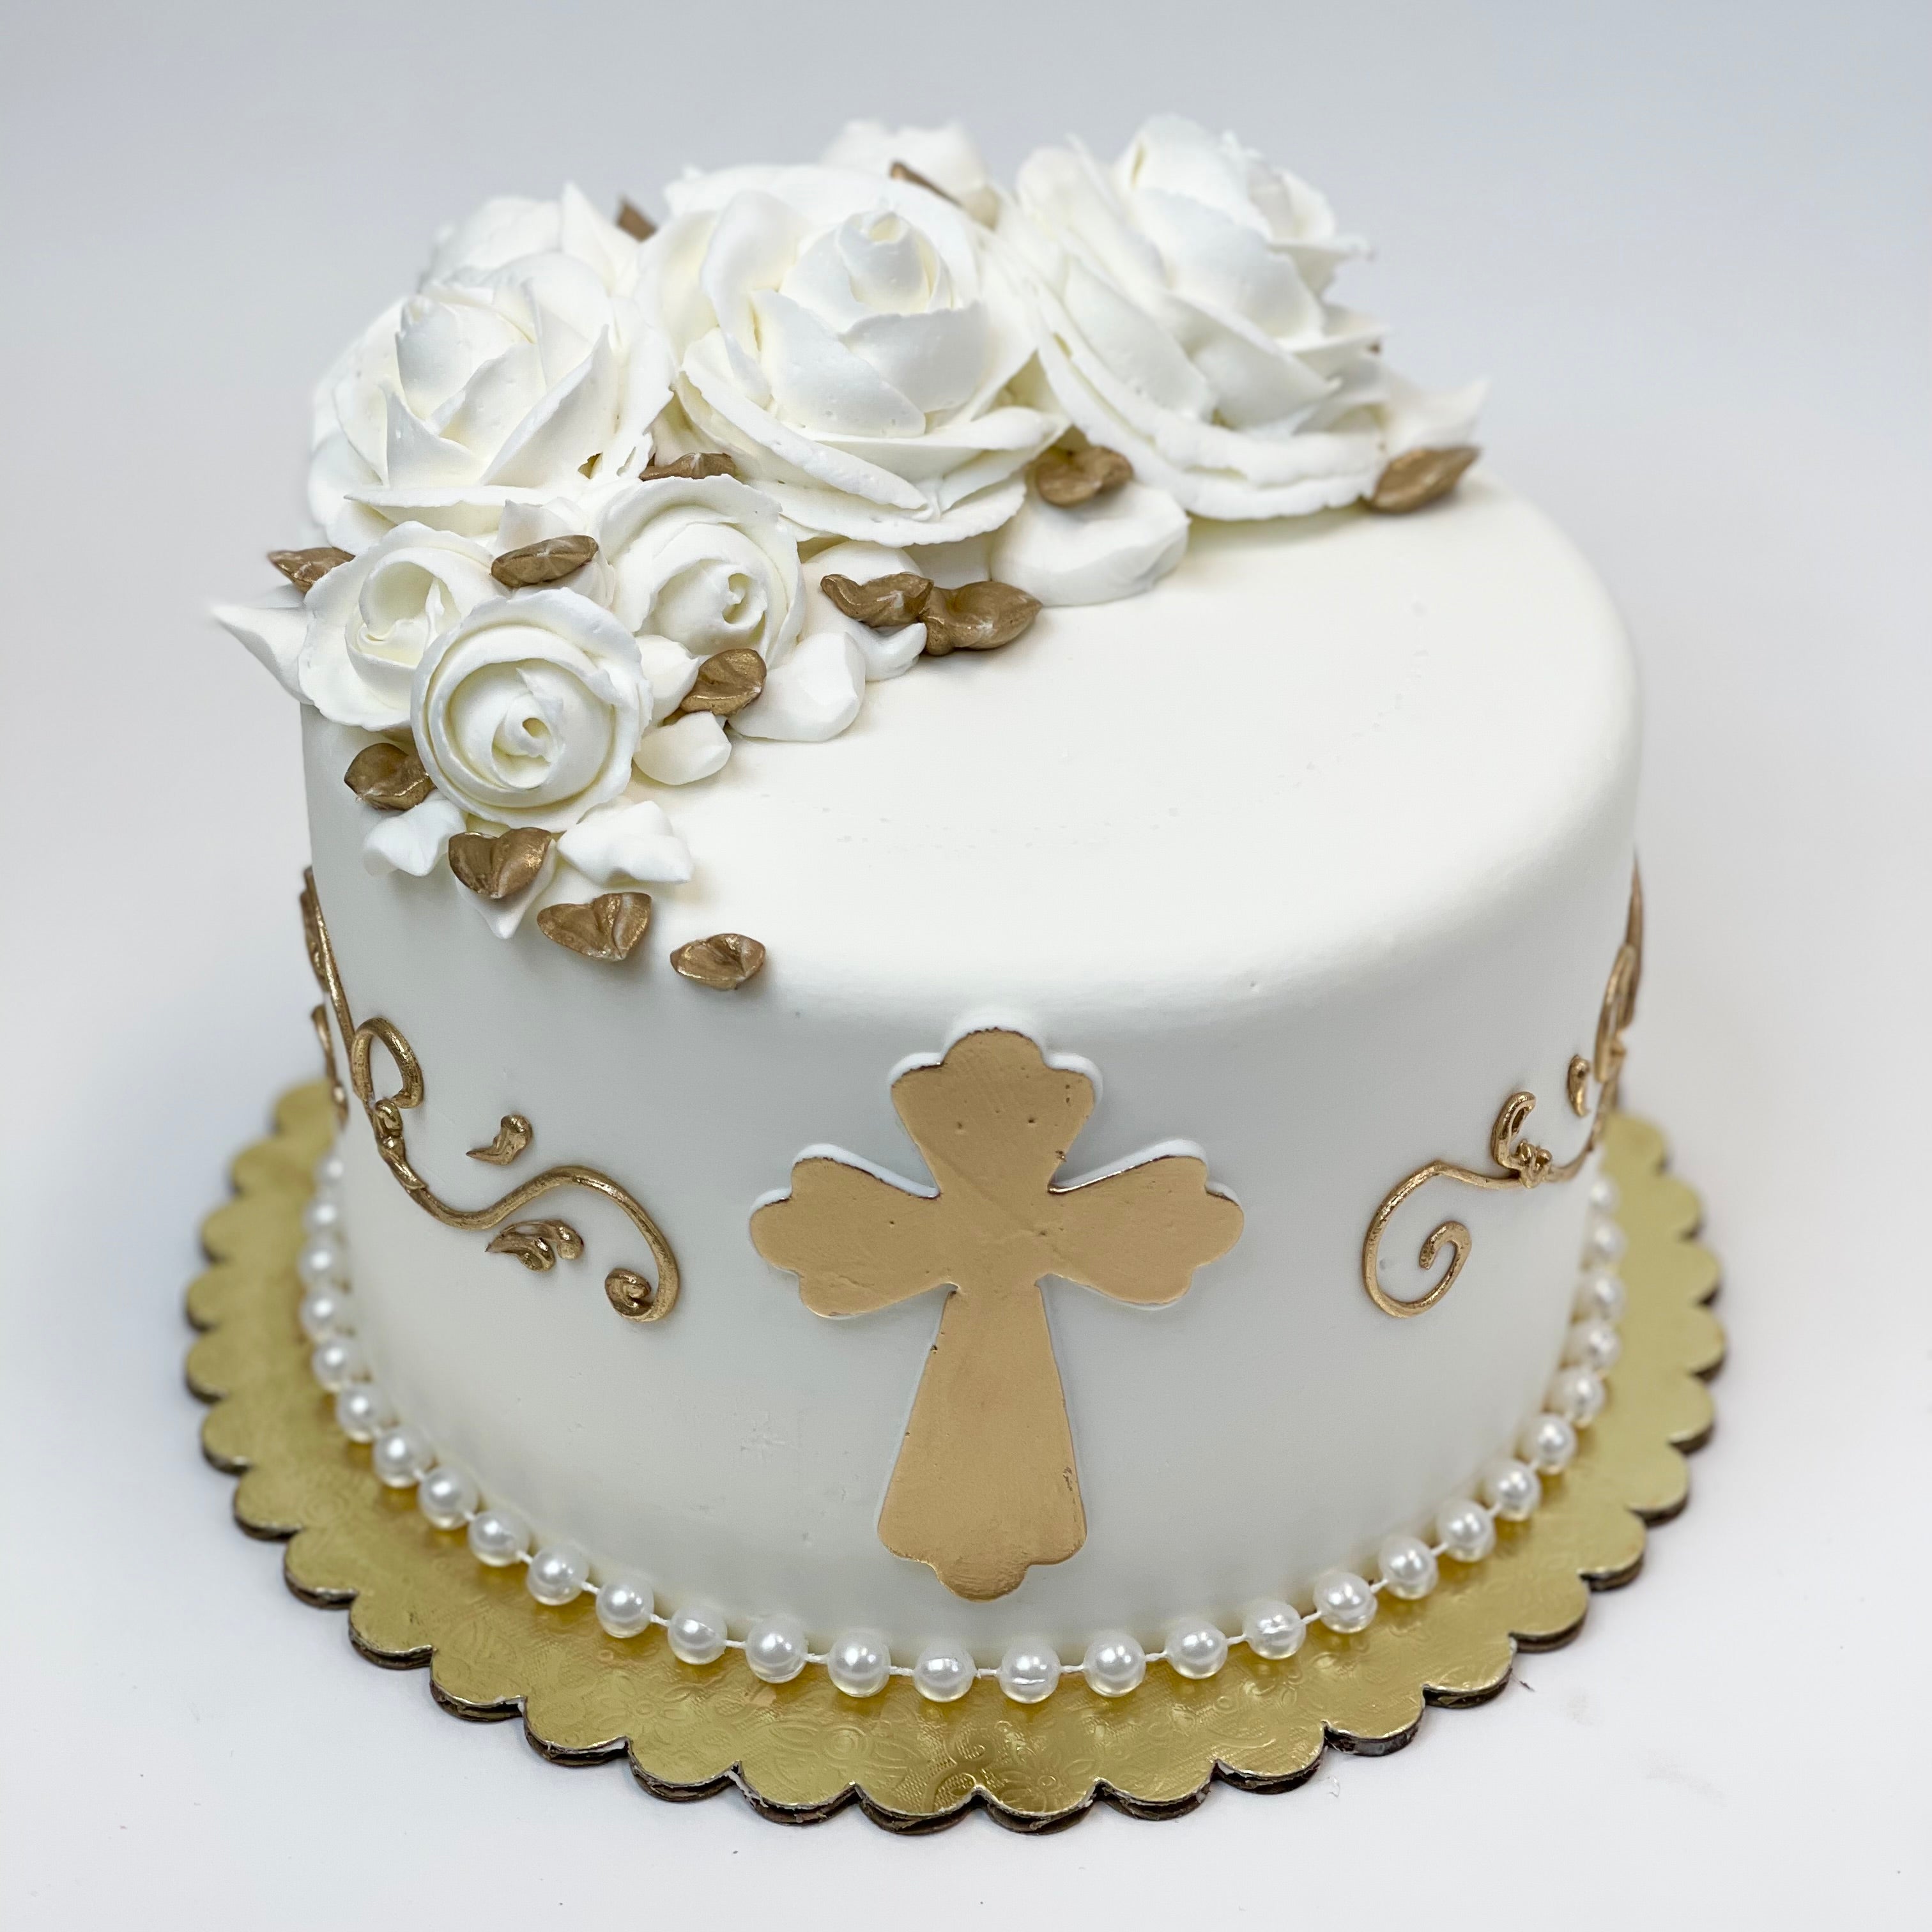 Religious Celebration Cake